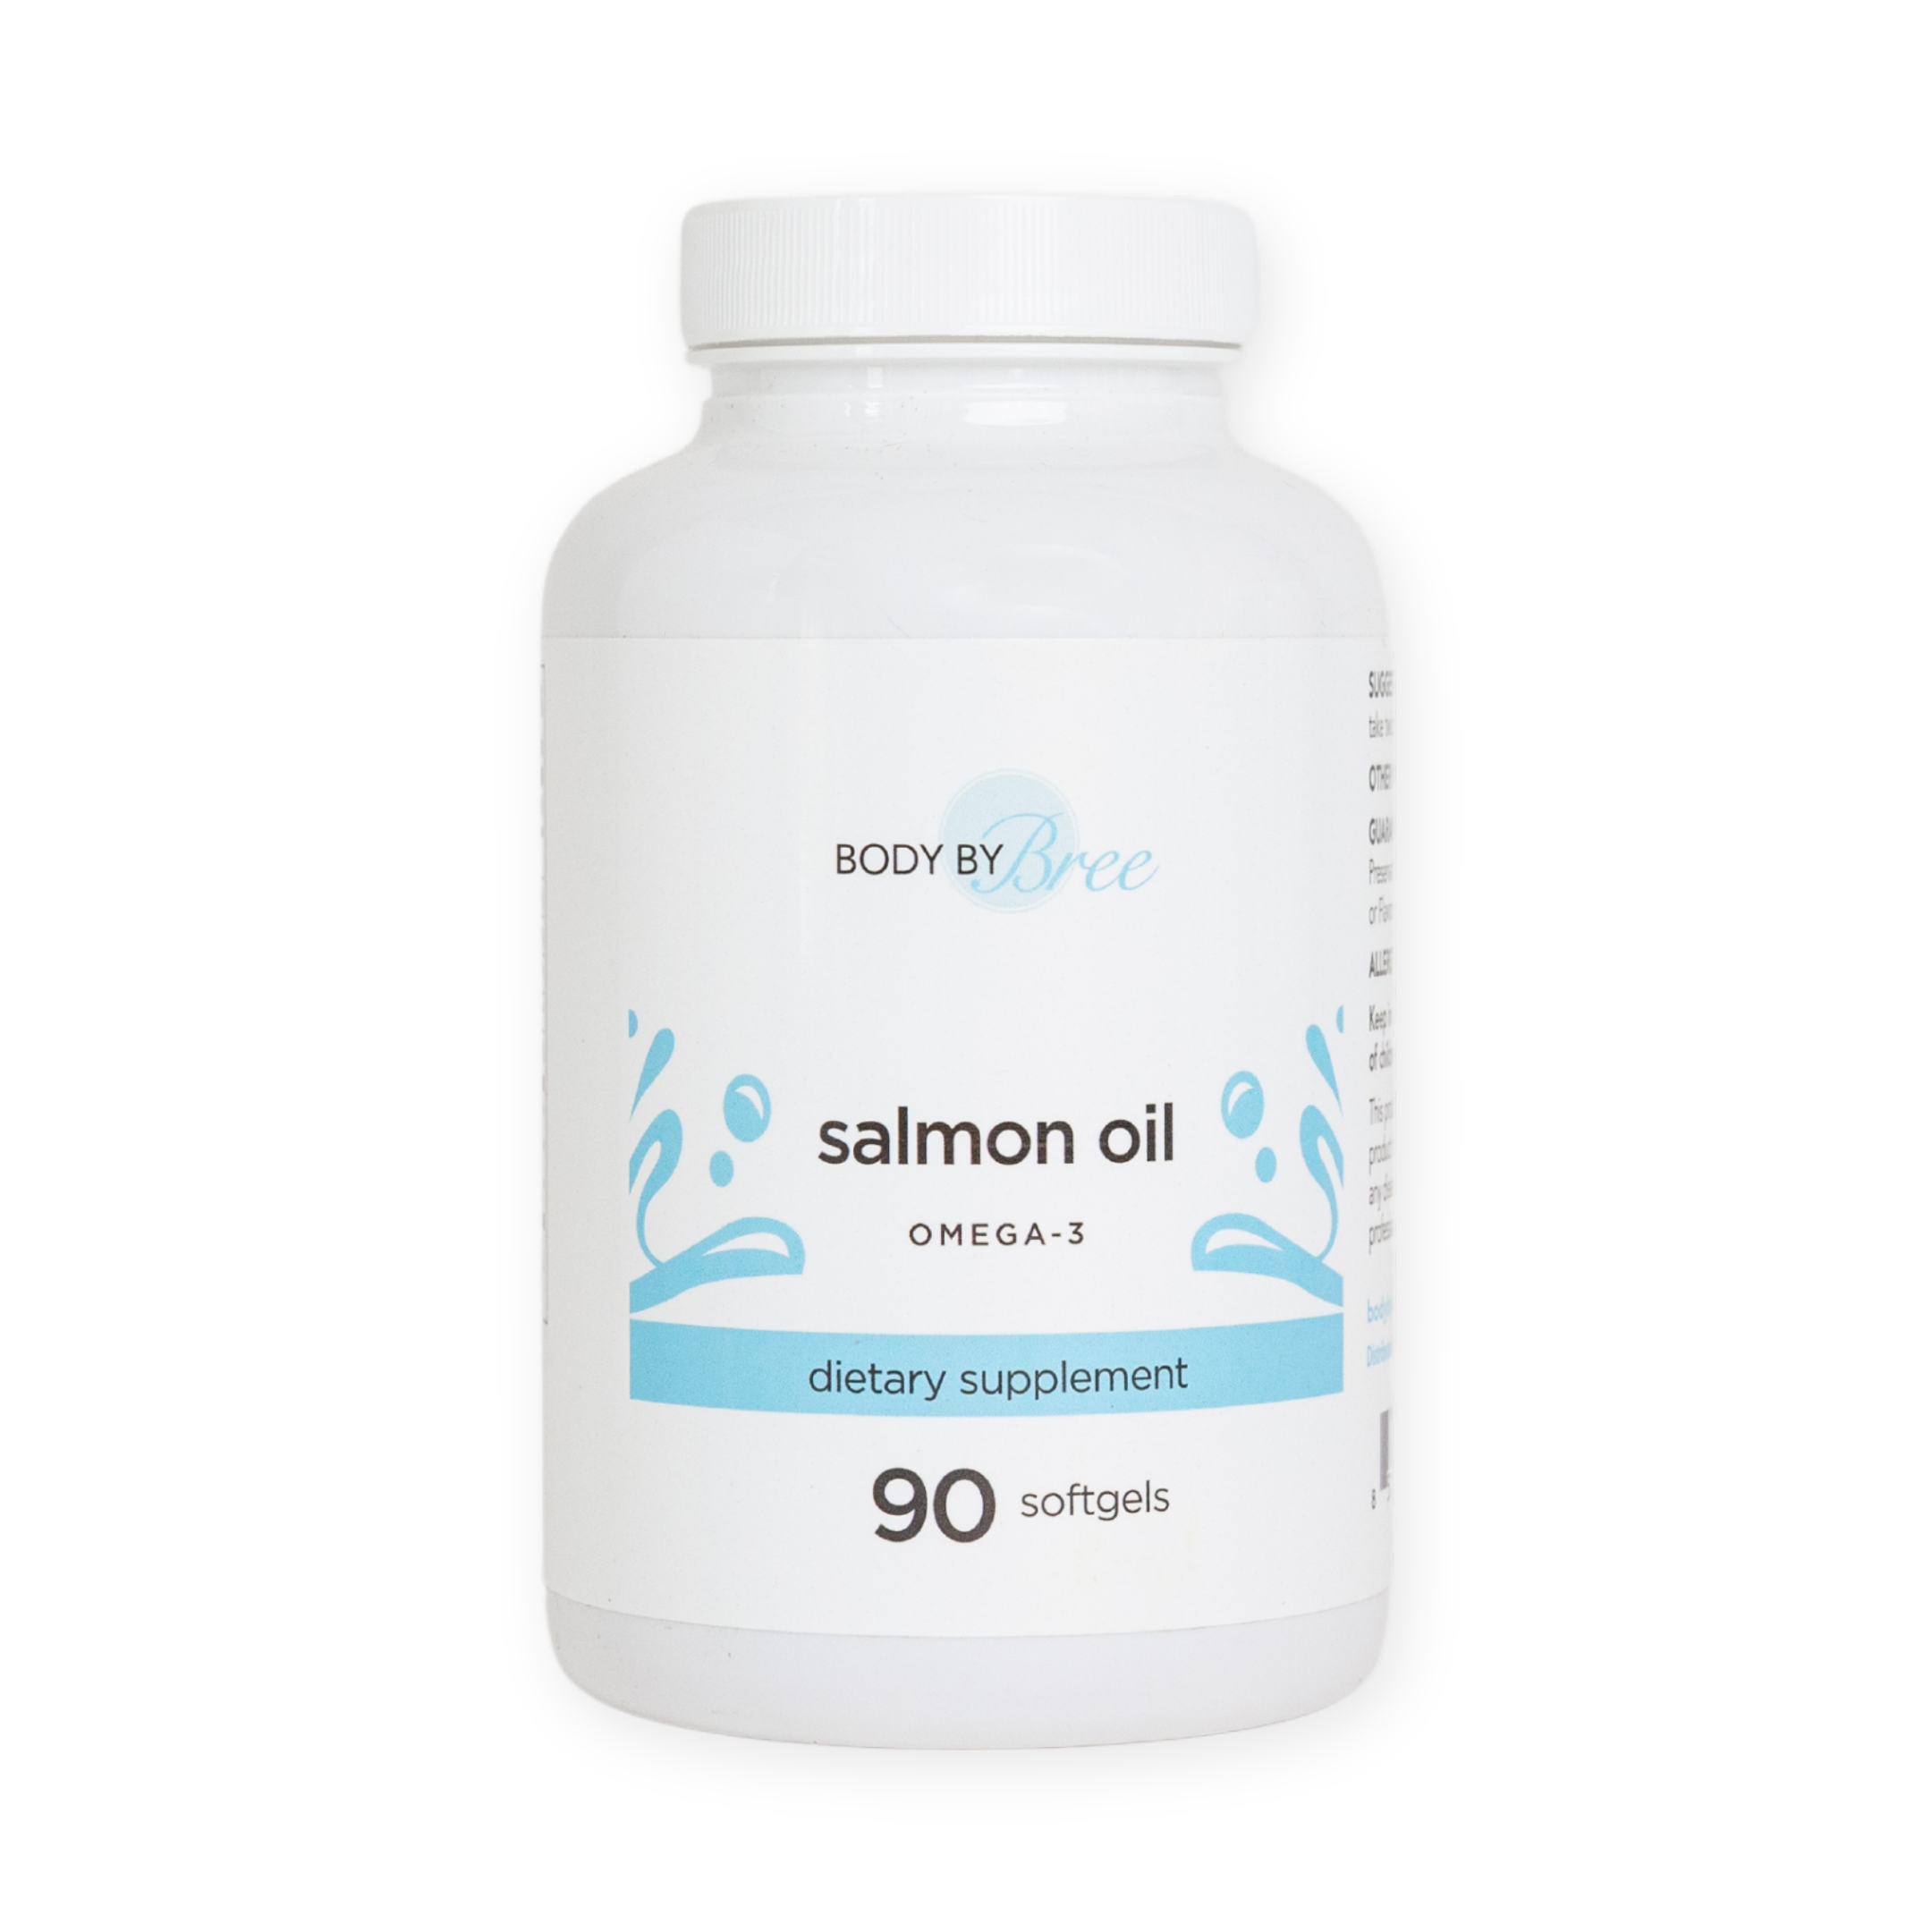 OMEGA-3 Salmon Oil